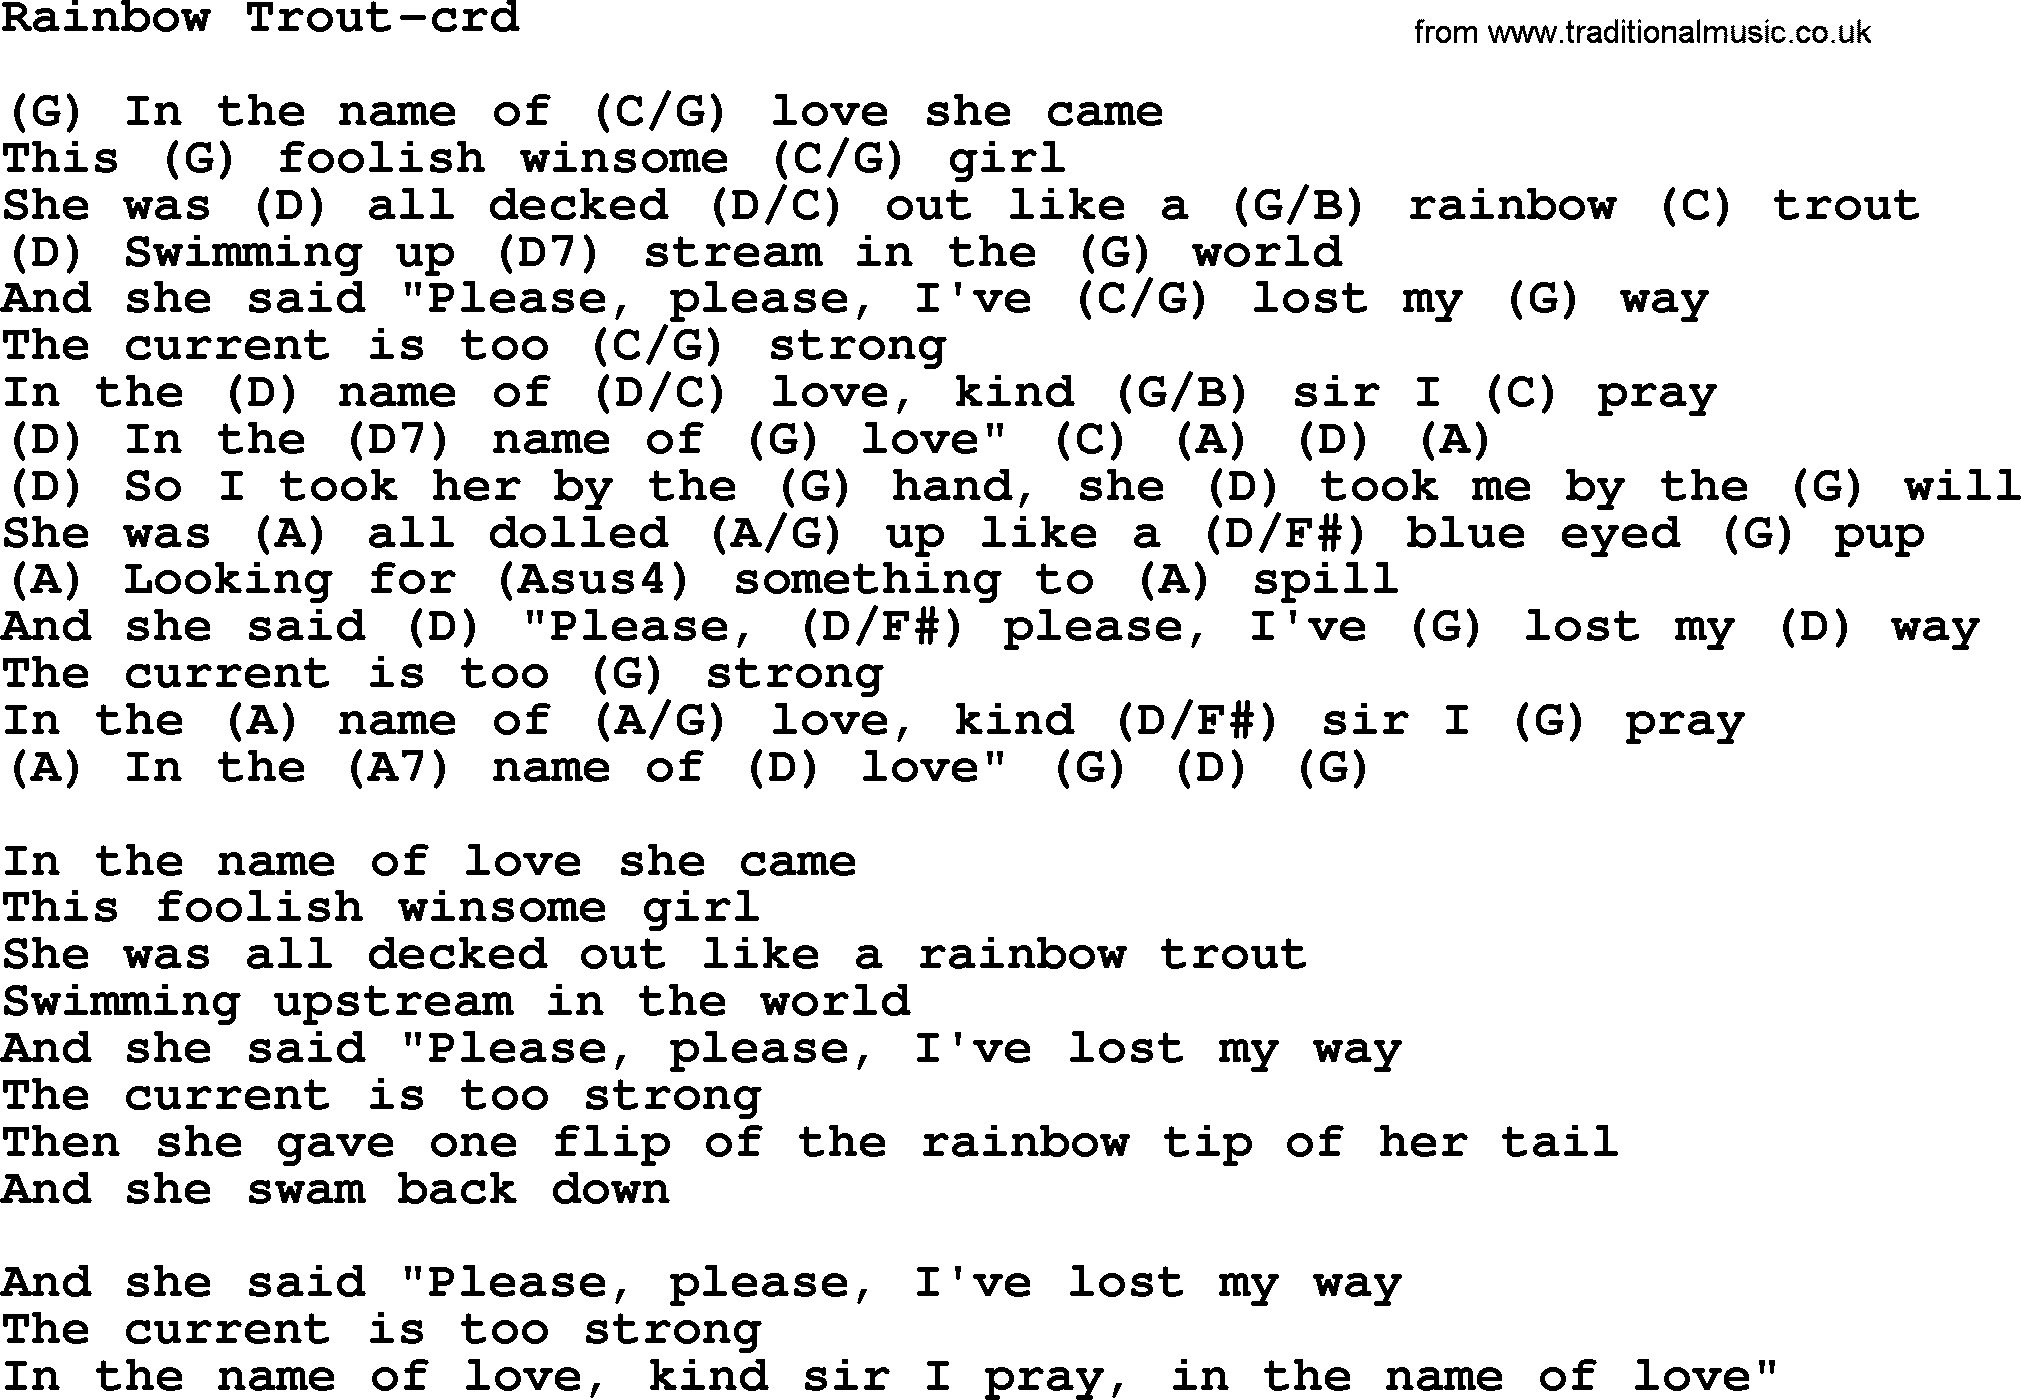 Gordon Lightfoot song Rainbow Trout, lyrics and chords